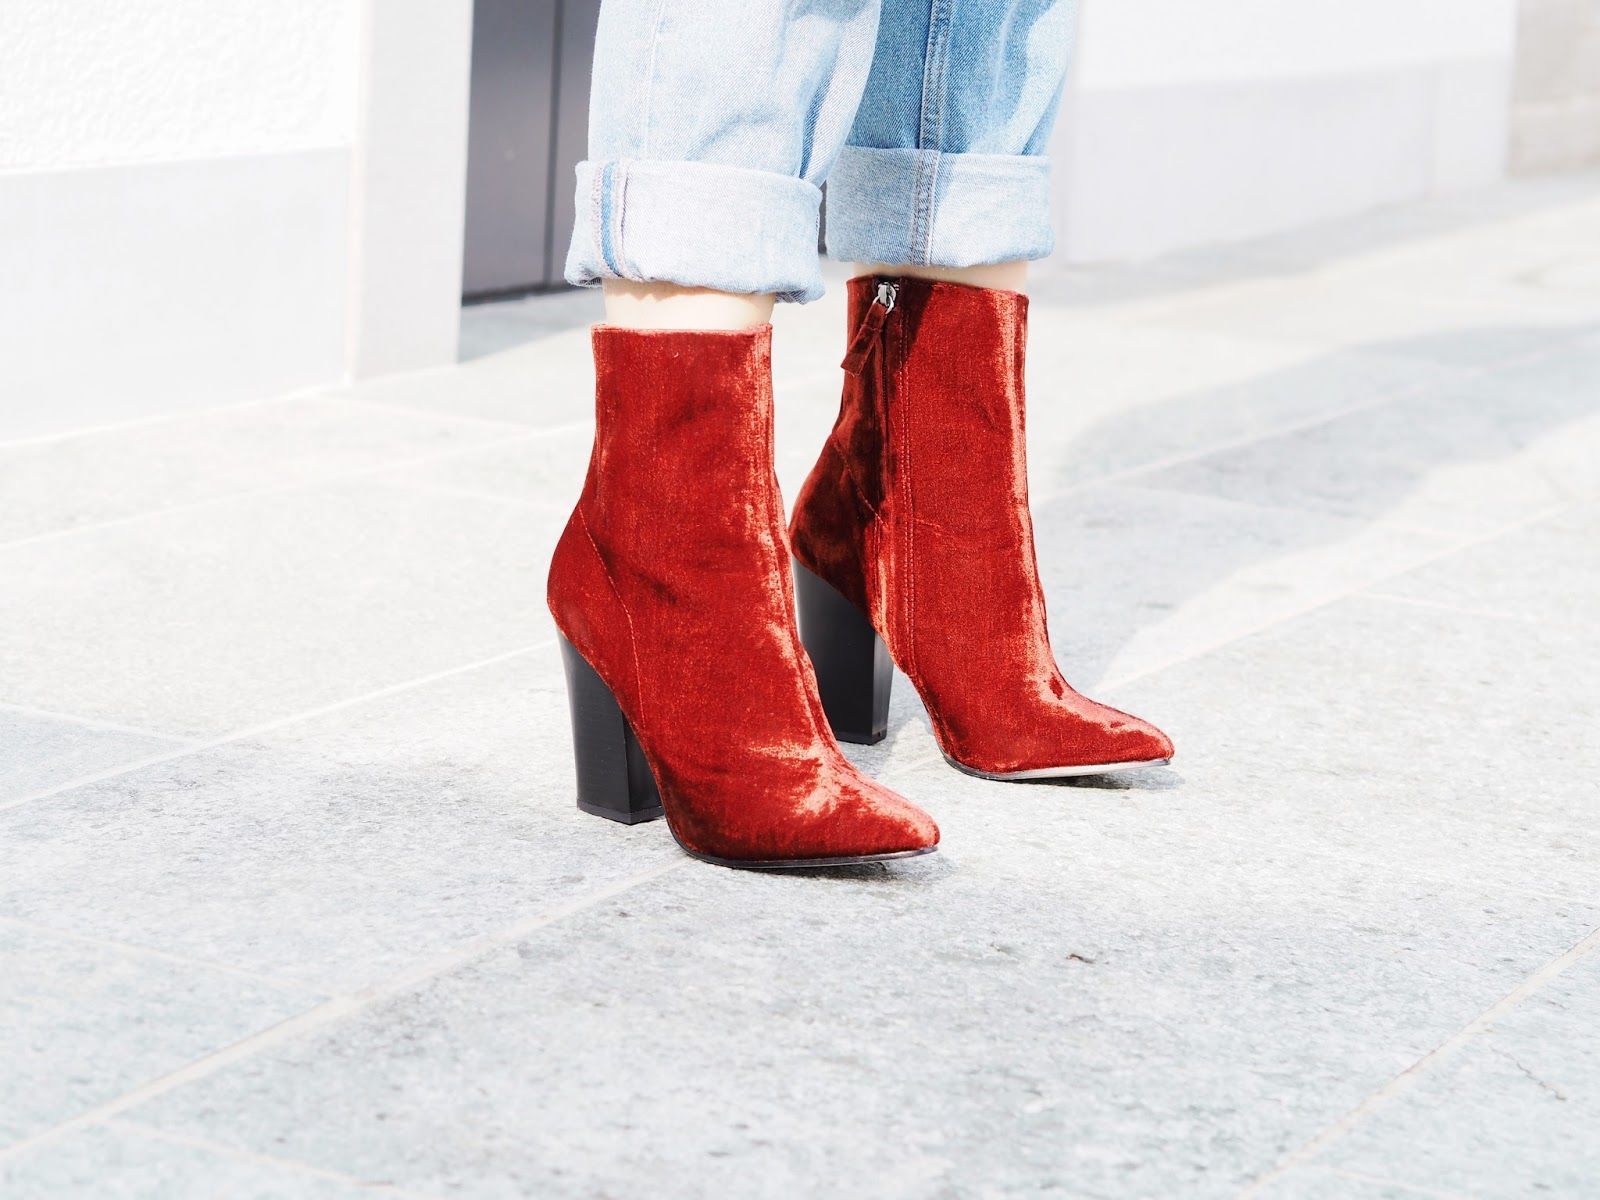 6. The mini heeled boots